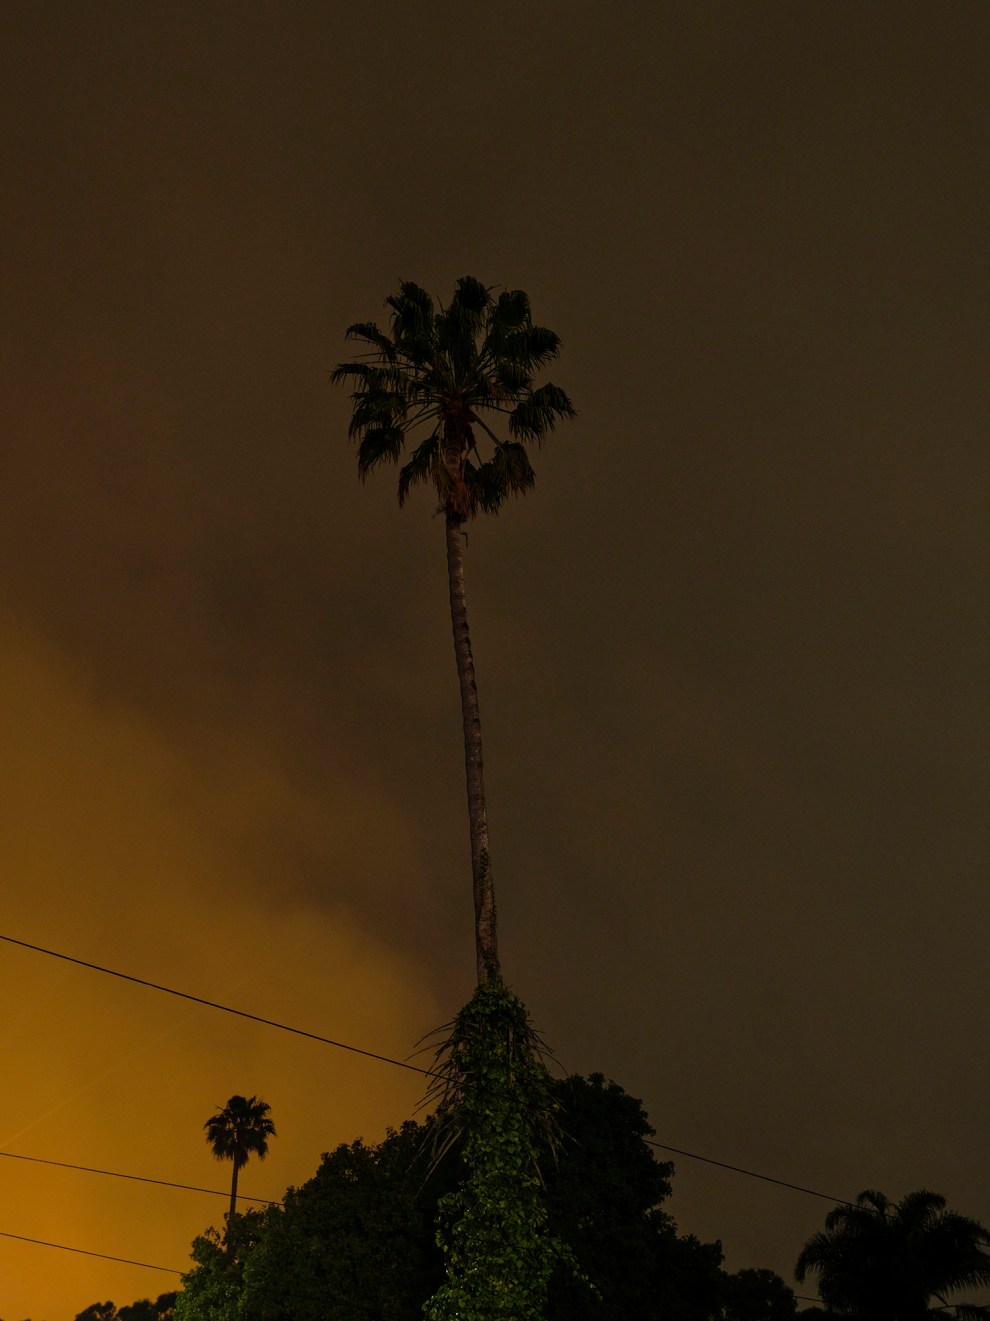 A dark palm tree against an orangey dusk sky.